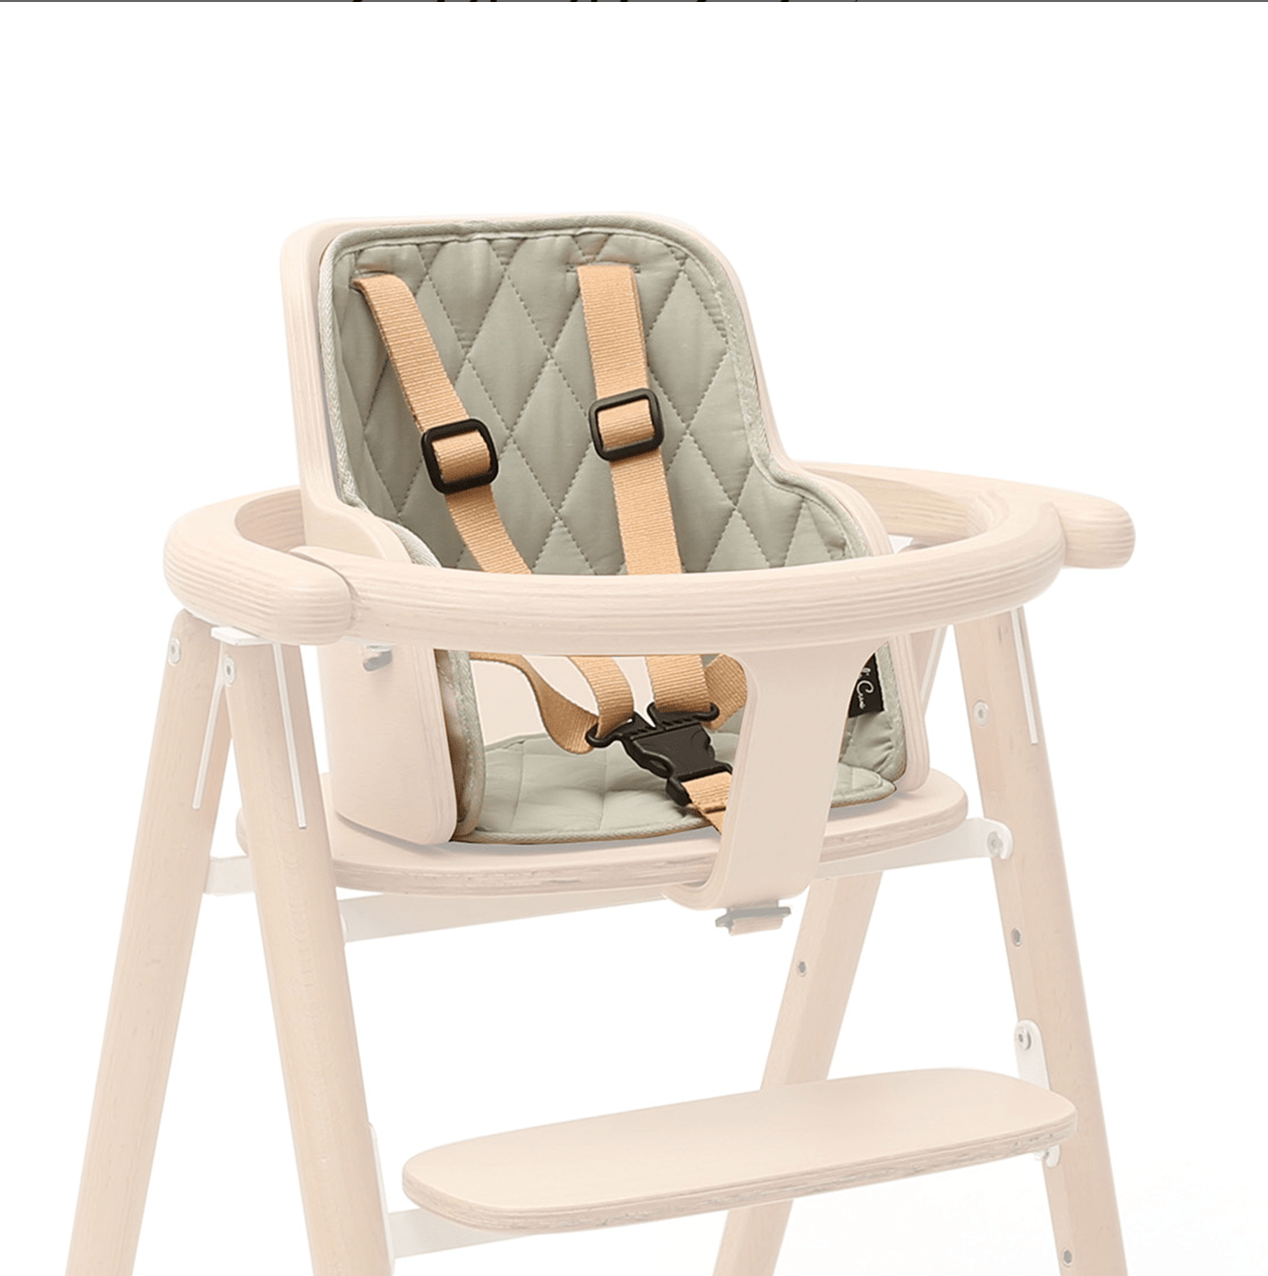 Charlie Crane TOBO Chair Cushions, en del av kategorien Furniture - At Home Interiør